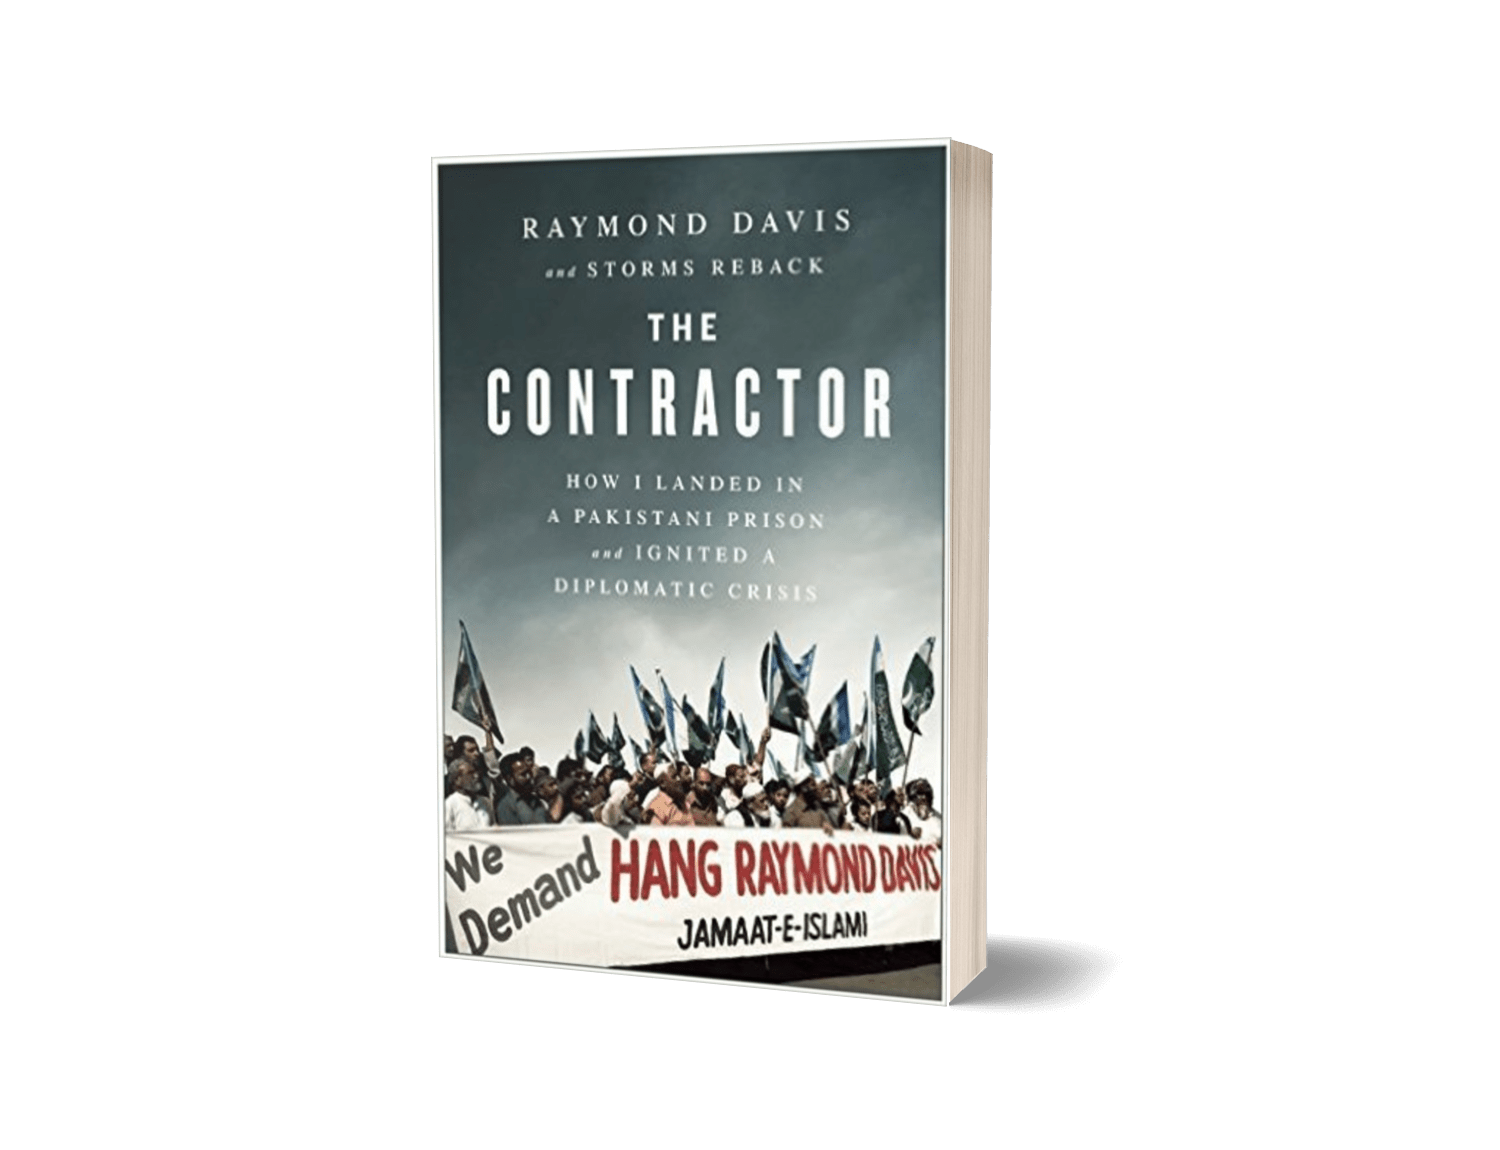 The Contractor by Raymond Davis